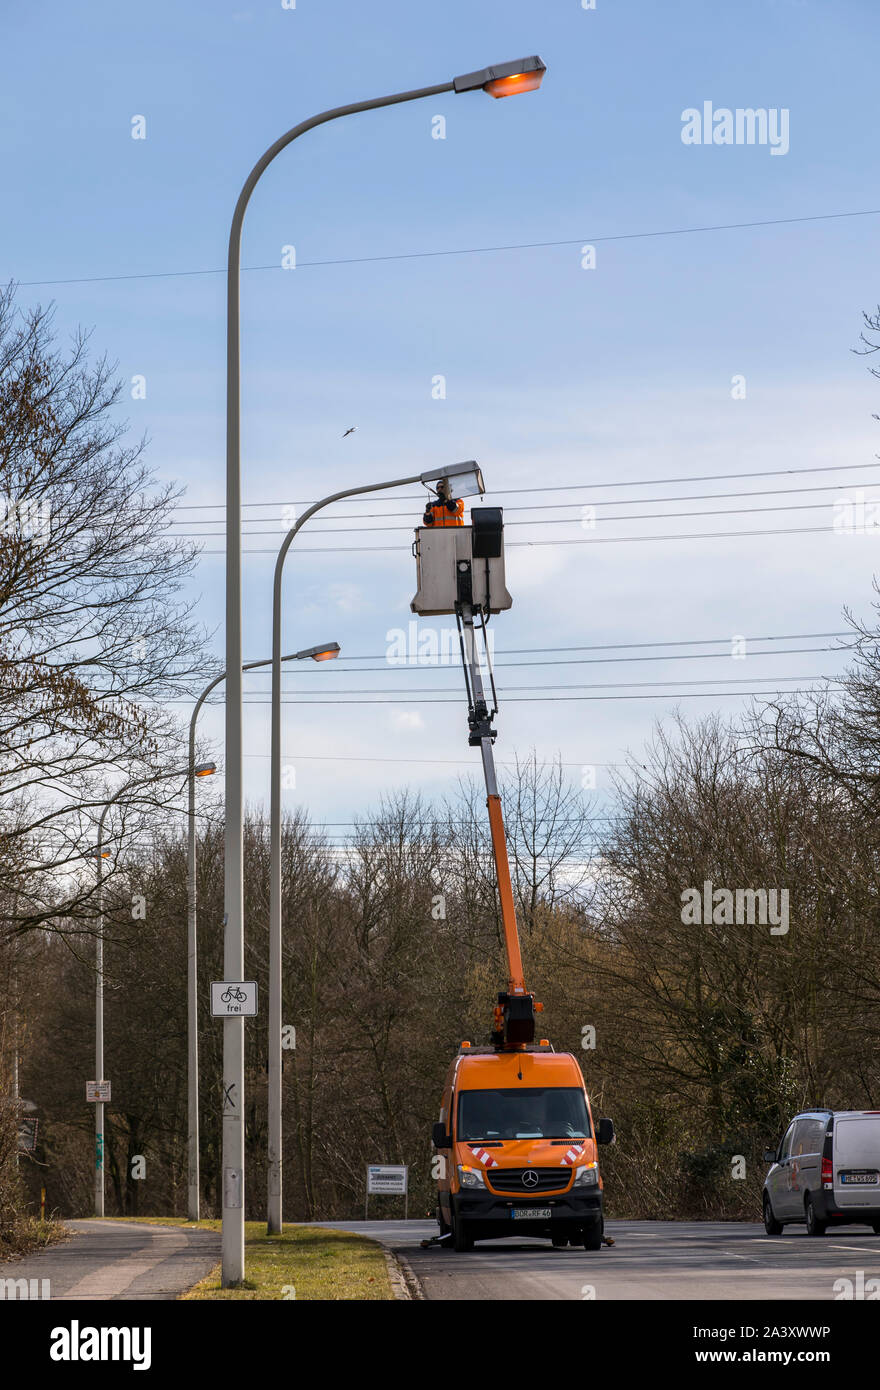 Repair, maintenance of street lamps, public utilities, in Düsseldorf, lift trucks, replacement of defective lamps, Stock Photo